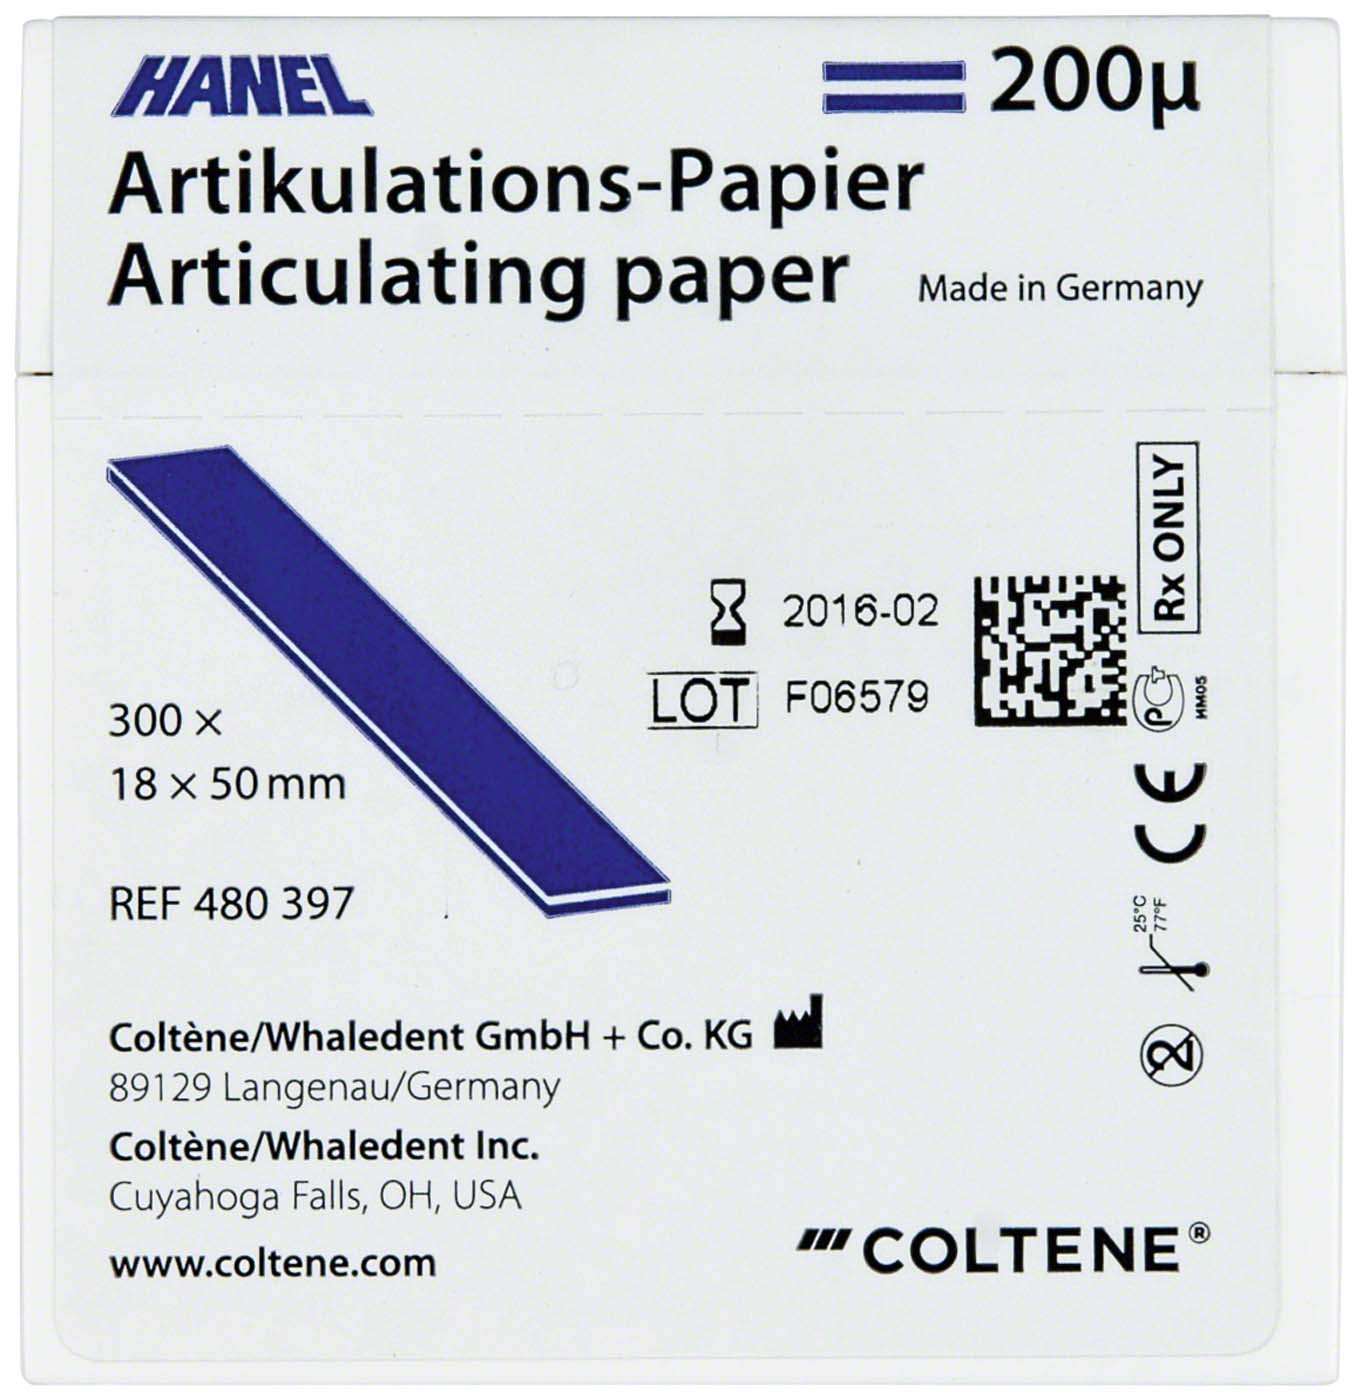 HANEL Artikulations-Papier 200 µm COLTENE